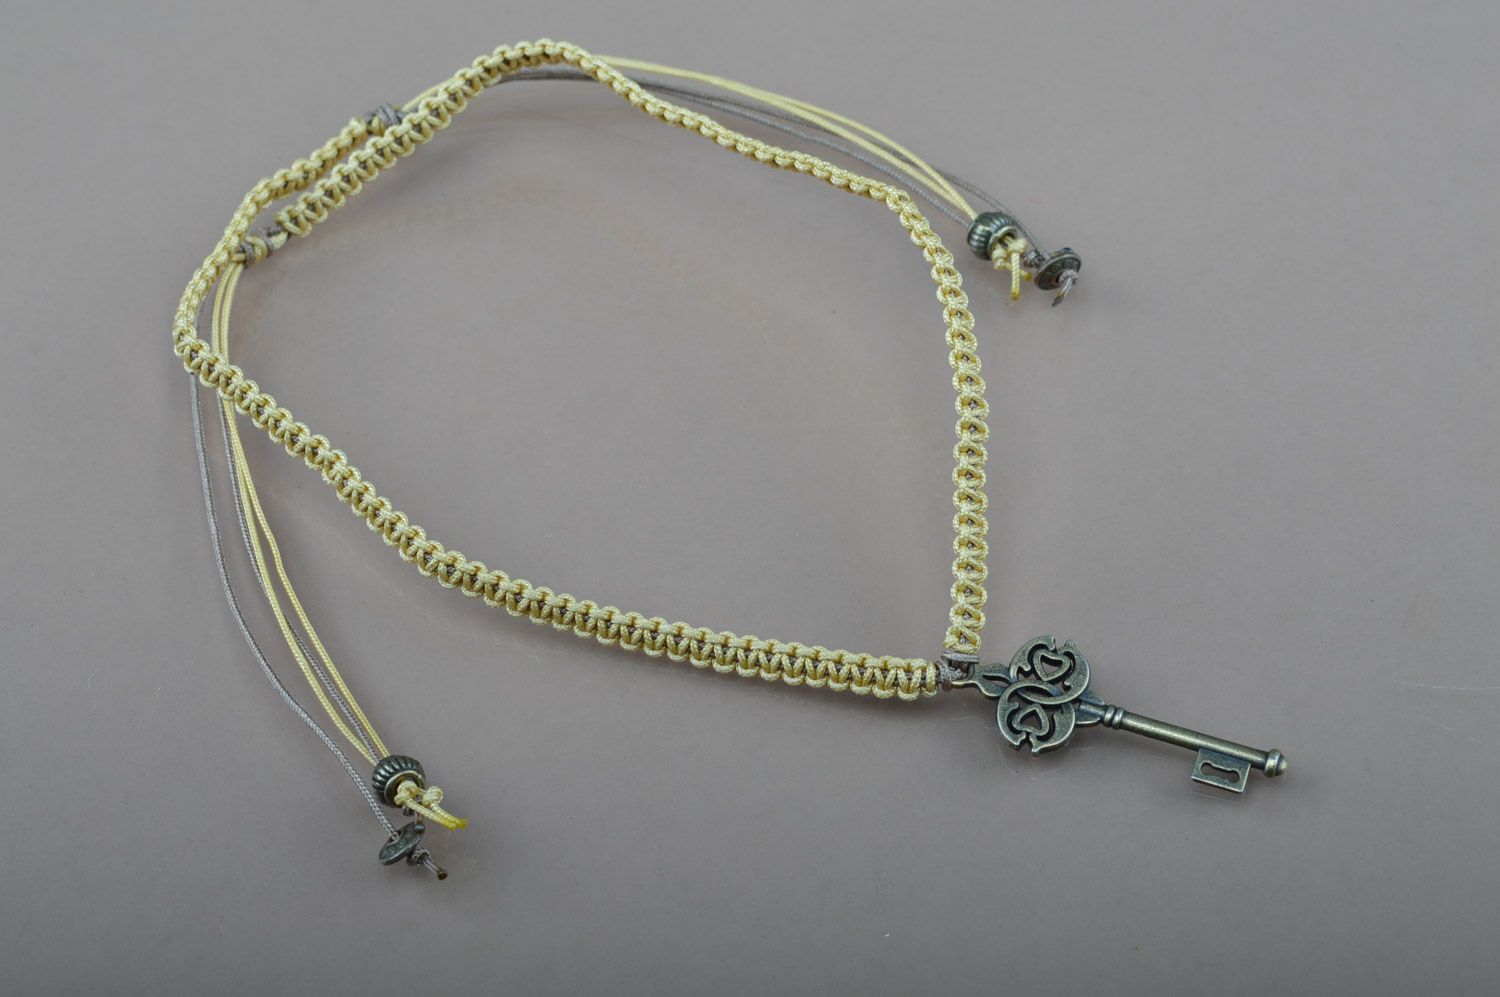 Handmade friendship wrist bracelet woven of cord with metal key-shaped charm photo 2